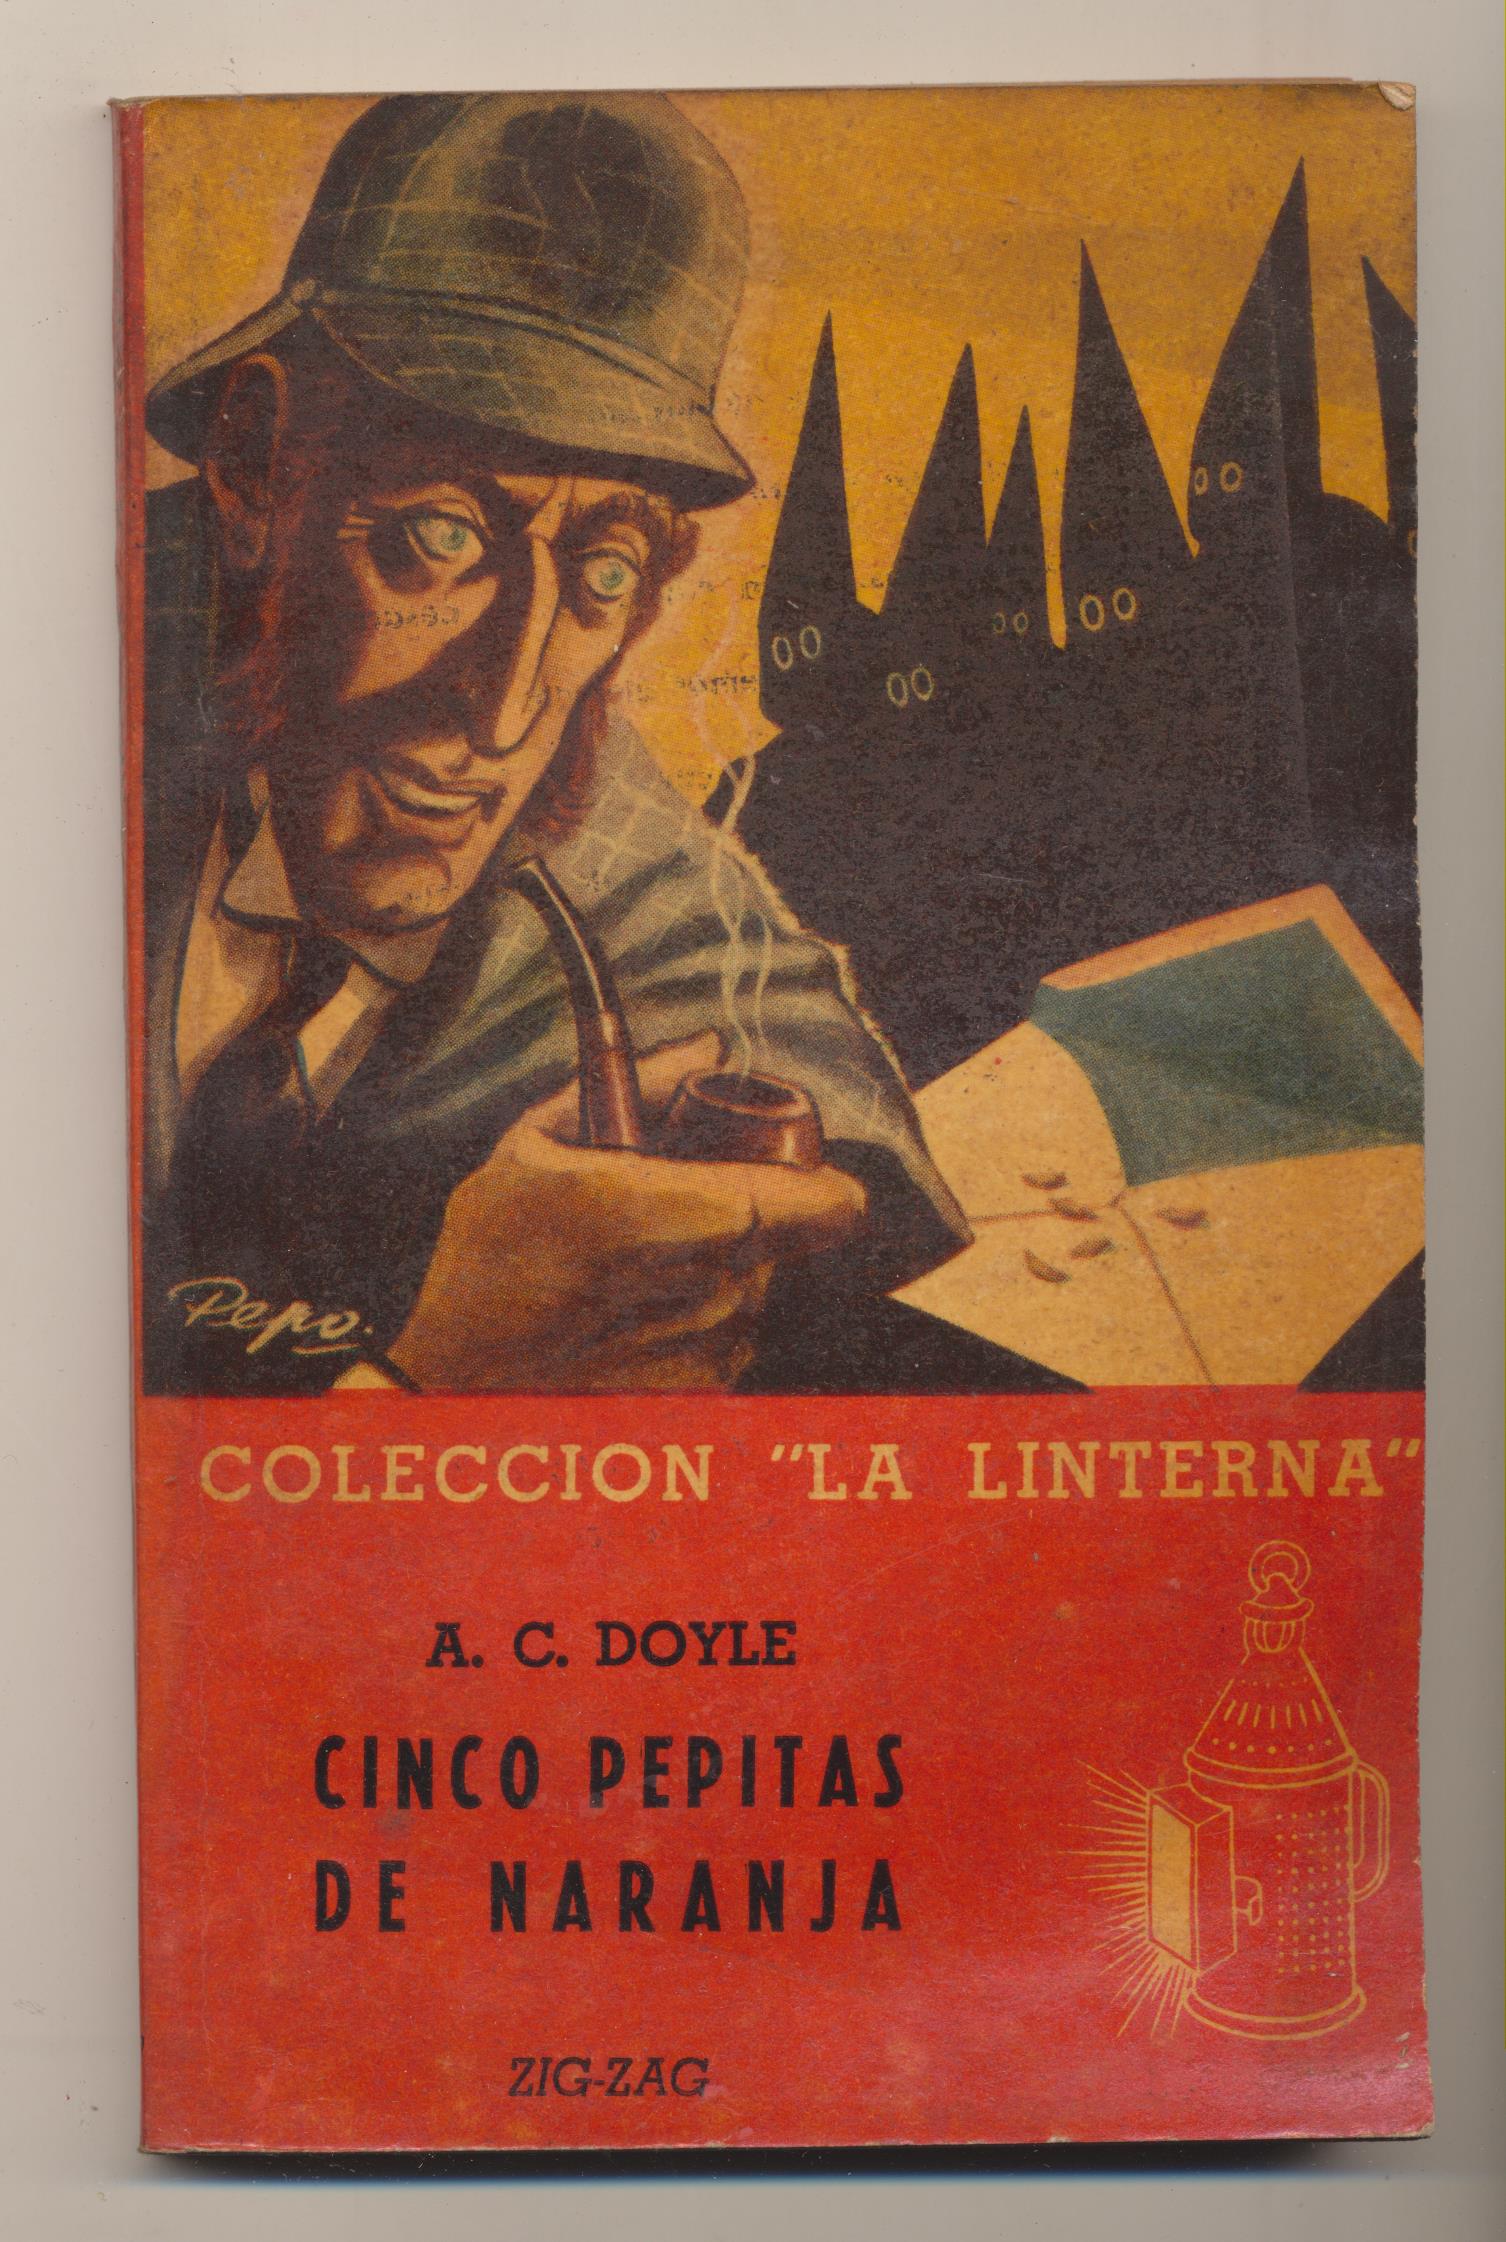 La Linterna nº 33. A. C. Doyle. Cinco pepitas de naranja. Zig-Zag, Chile 1945